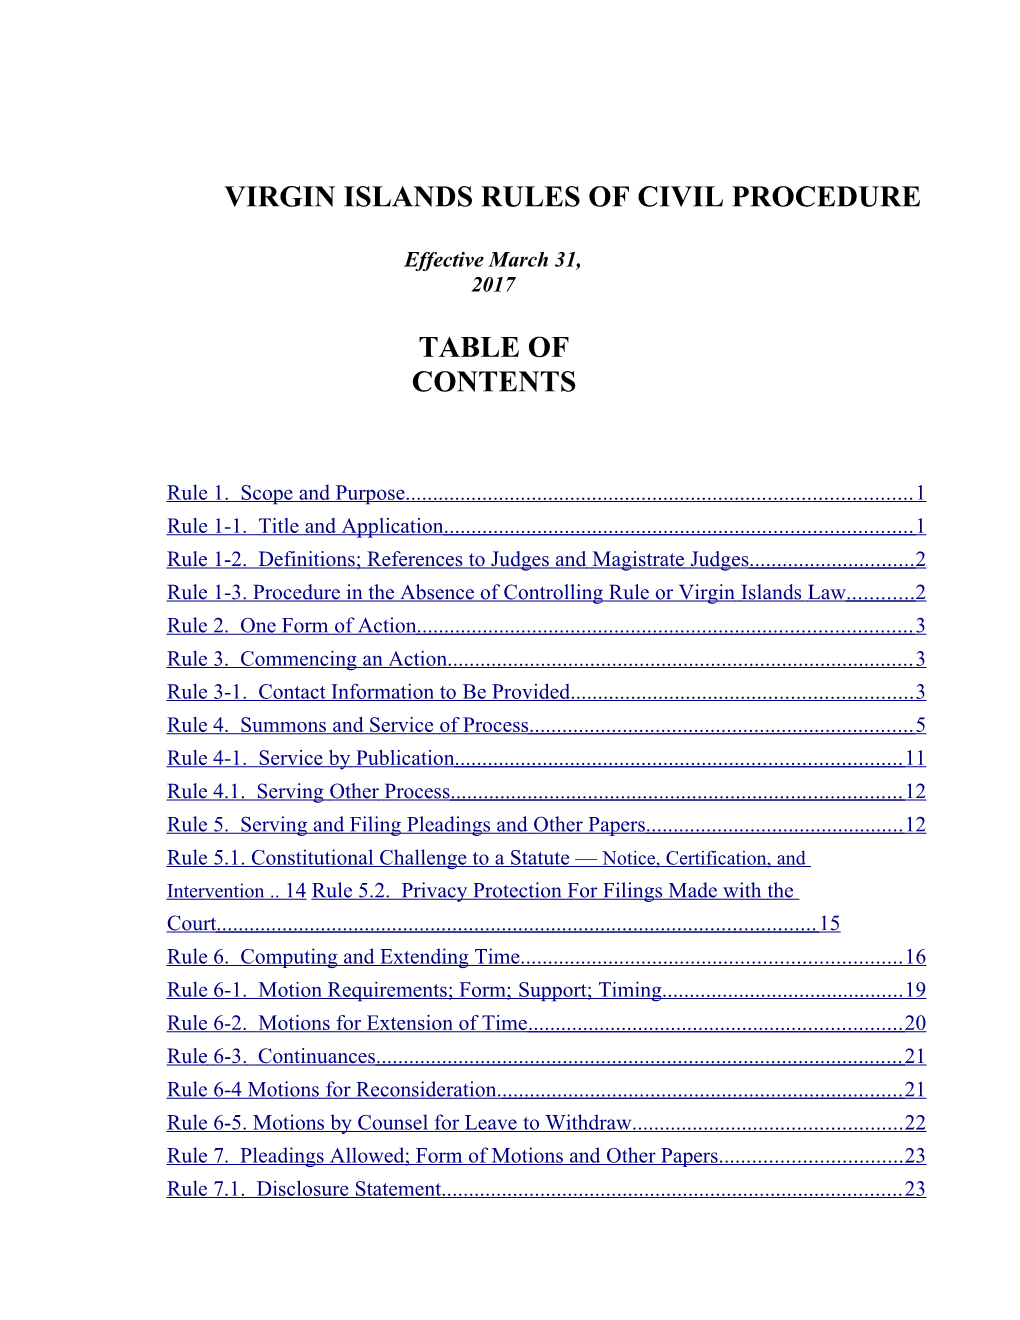 Virgin Islands Rules of Civil Procedure